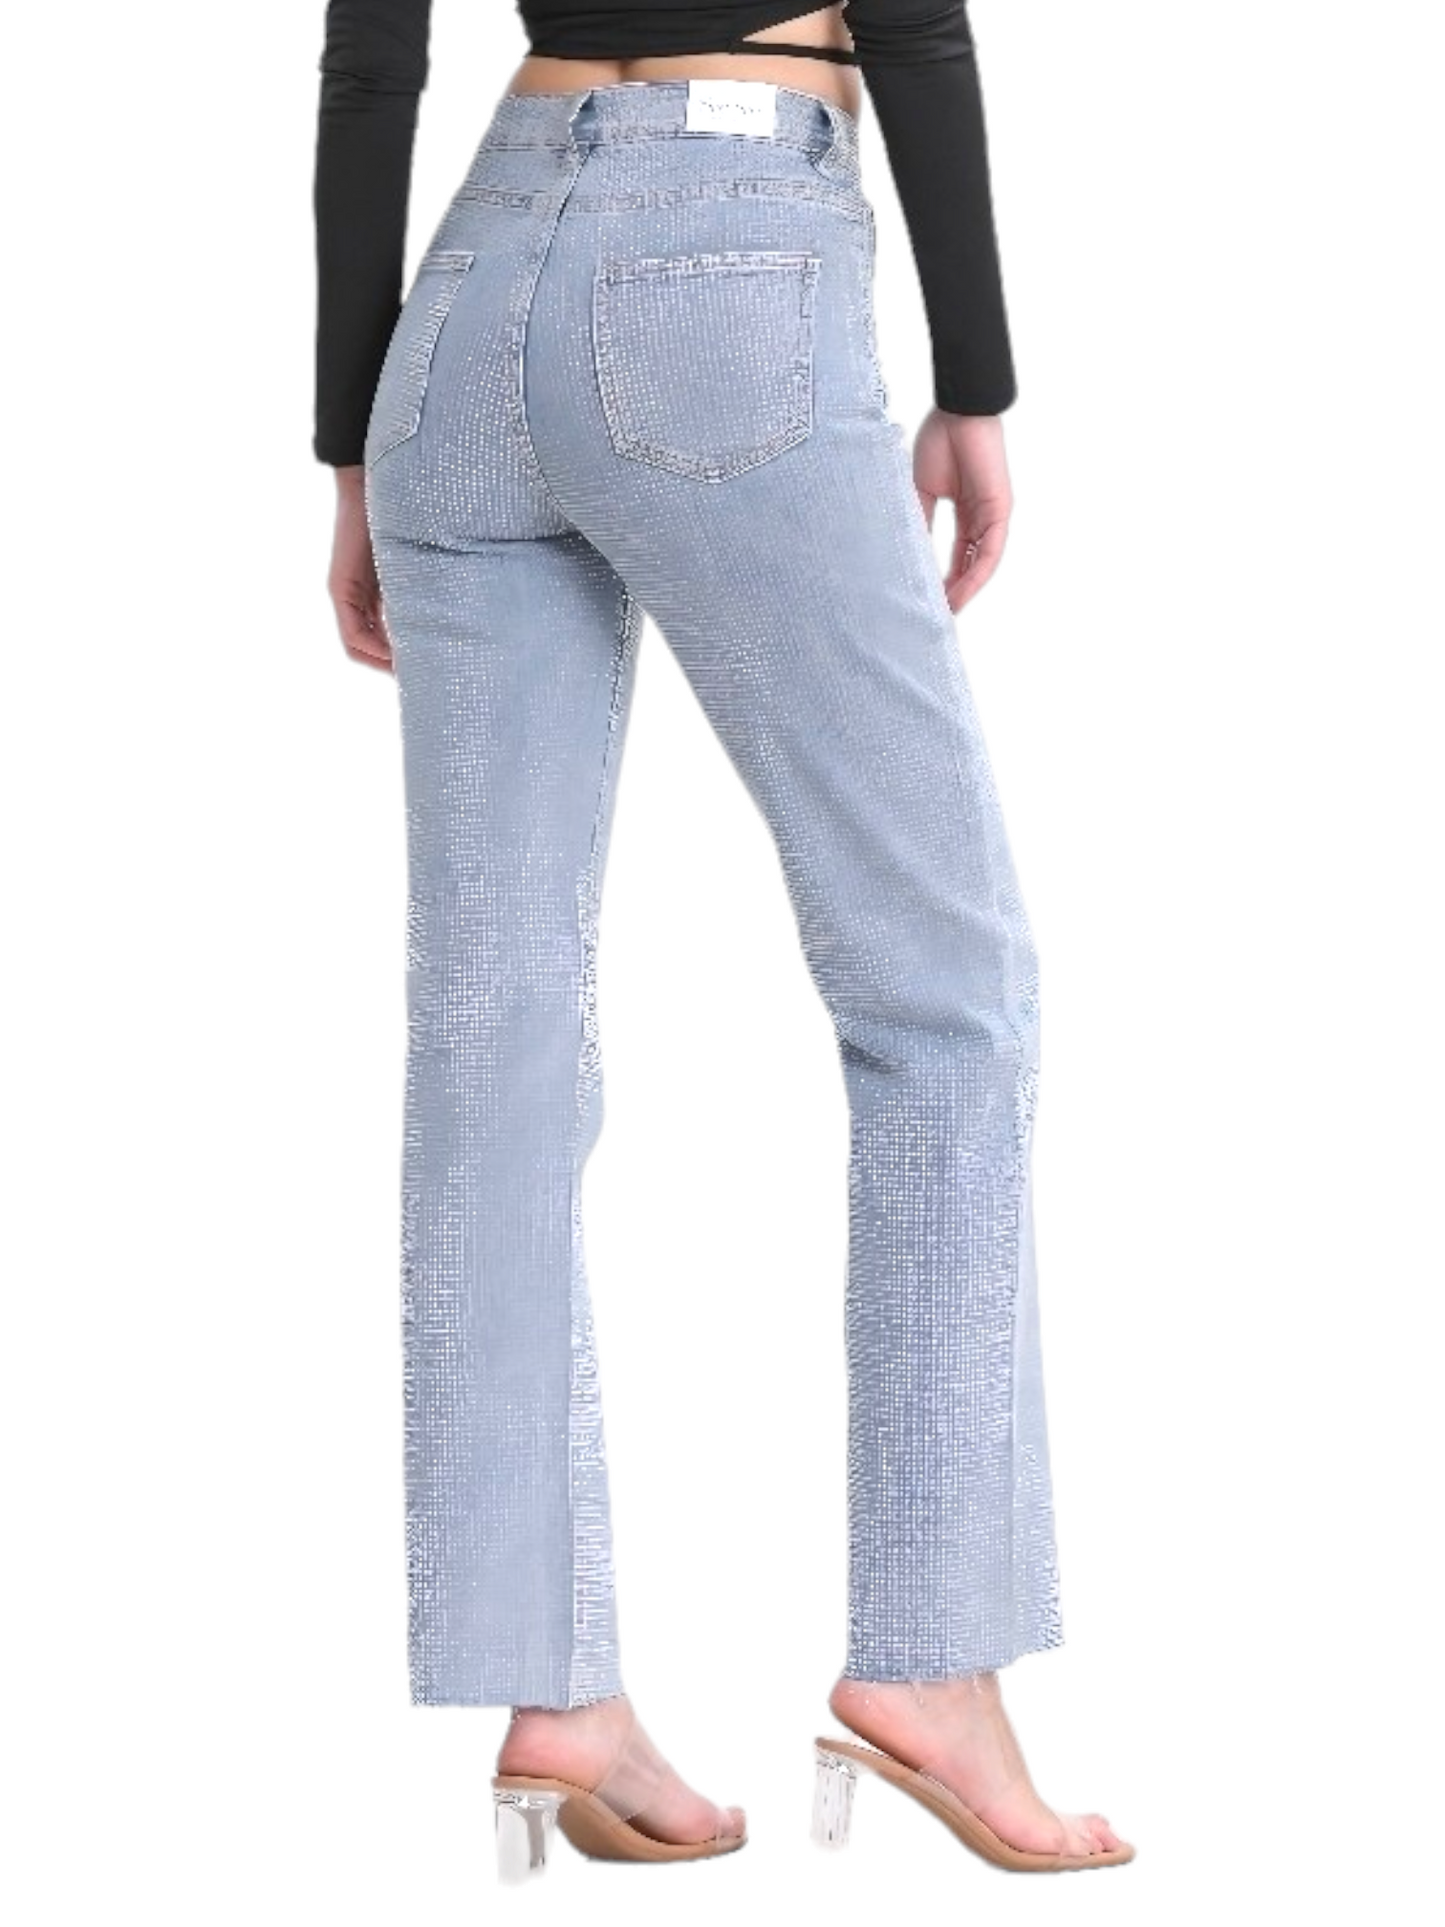 Jeans Blu stone multi strass (super richiesto)